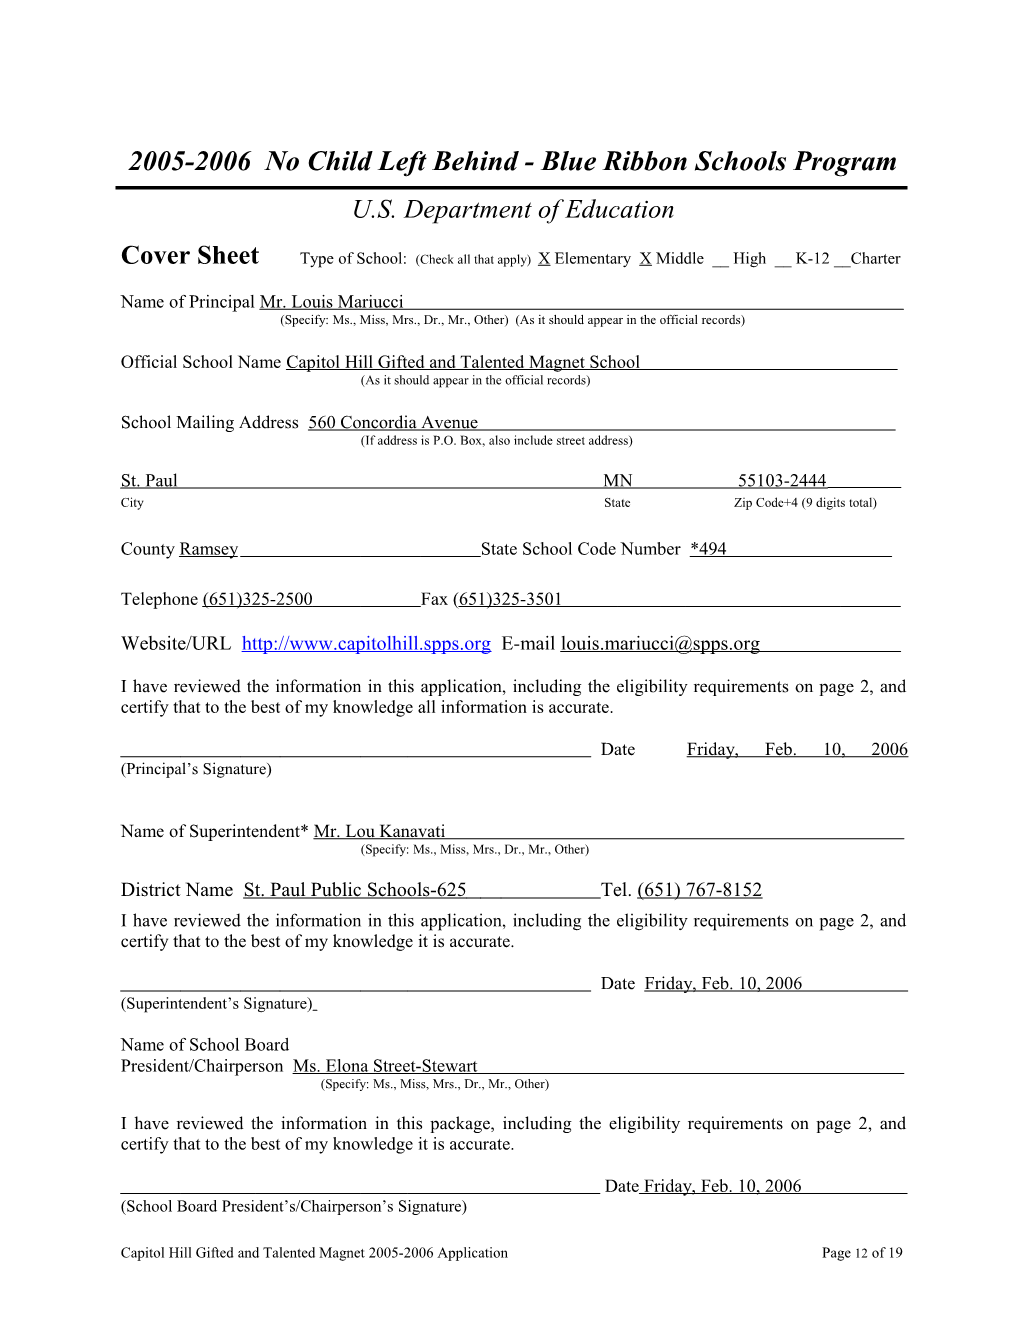 Application: 2005-2006, No Child Left Behind - Blue Ribbon Schools Program (Msword) s8